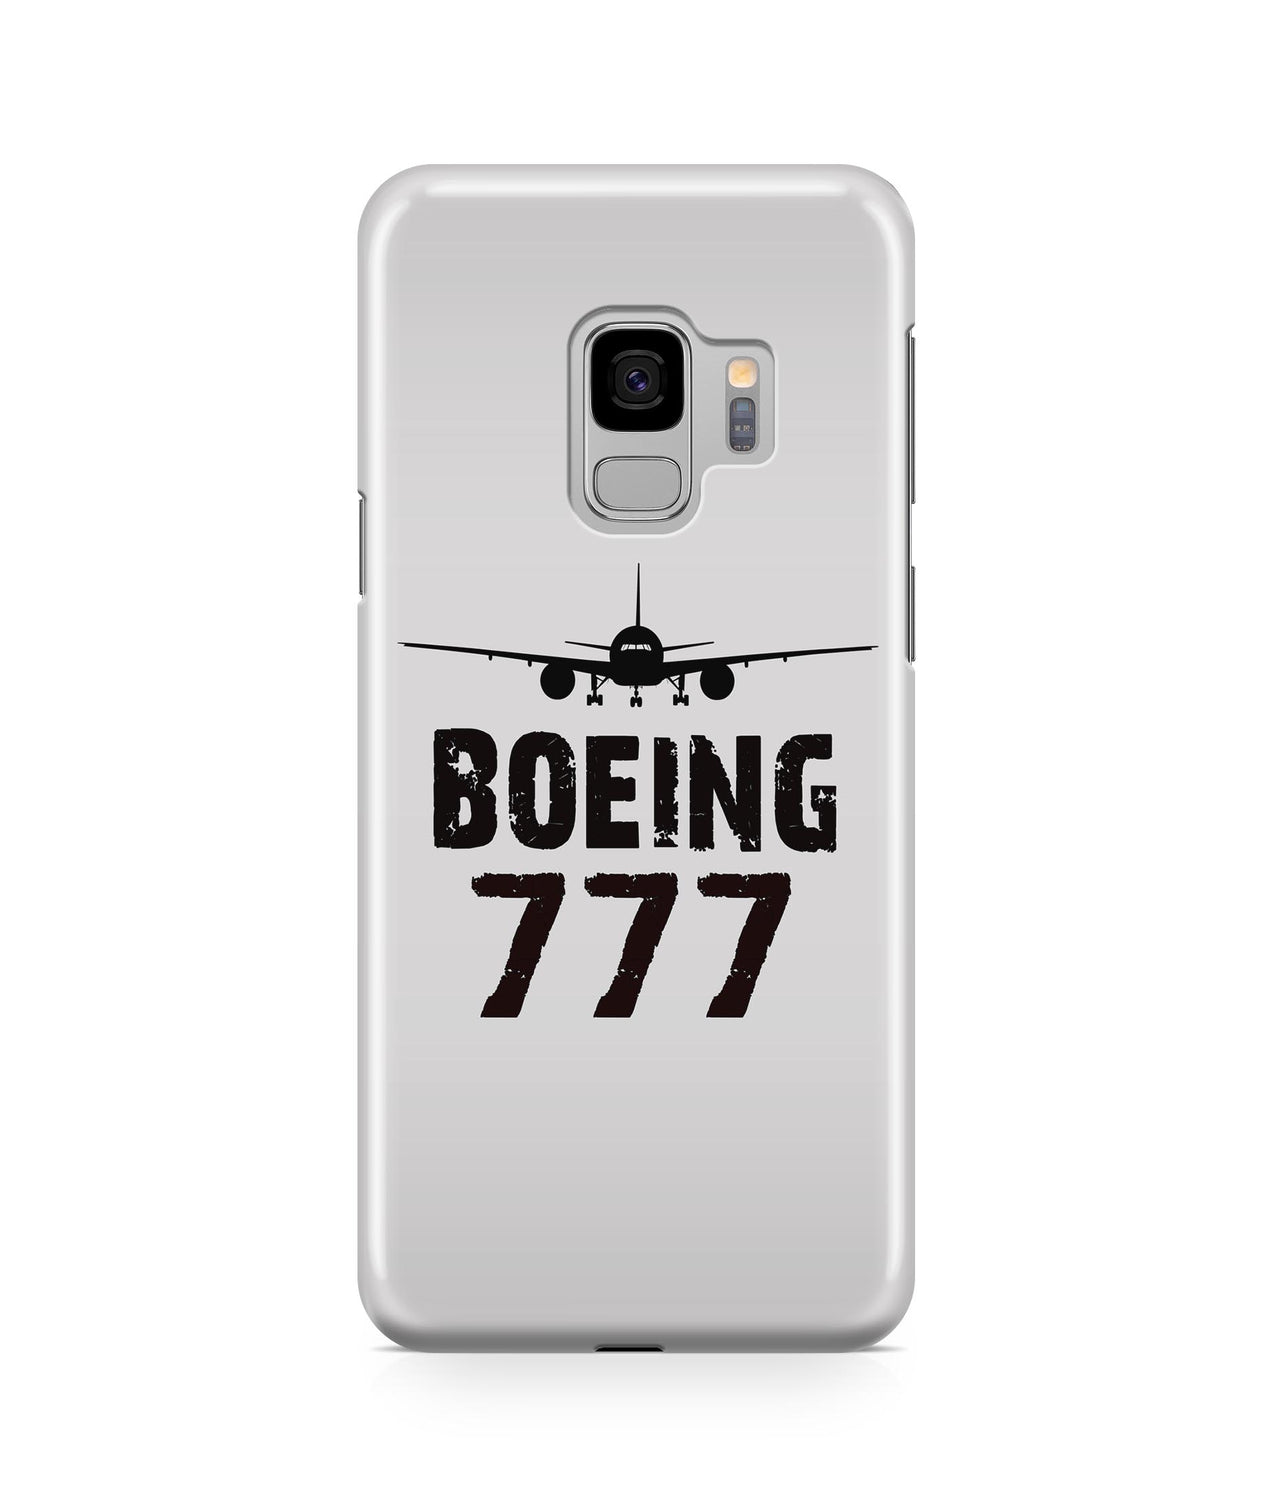 Boeing 777 Plane & Designed Samsung J Cases